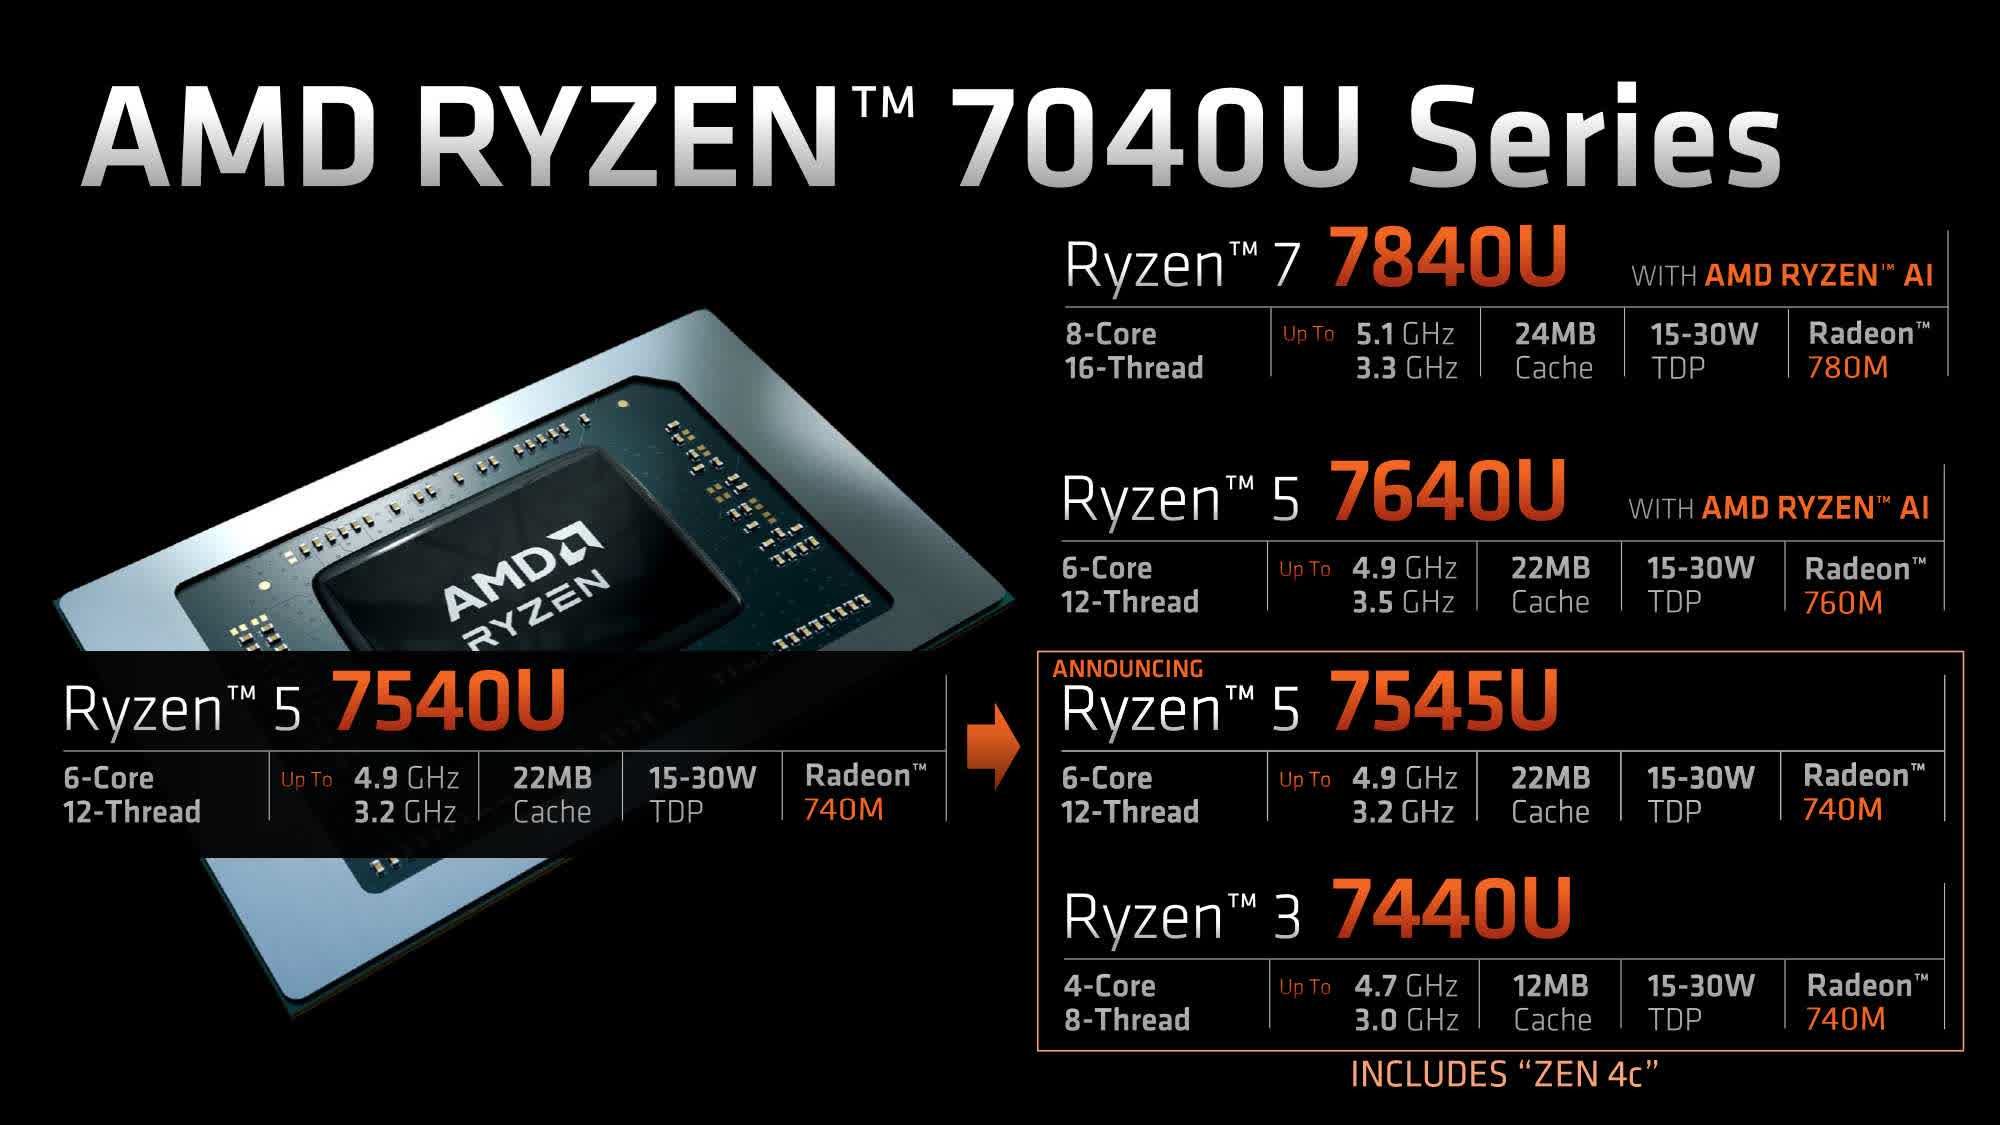 AMD announces Ryzen 5 7545U and Ryzen 3 7440U mobile processors with Zen 4c cores